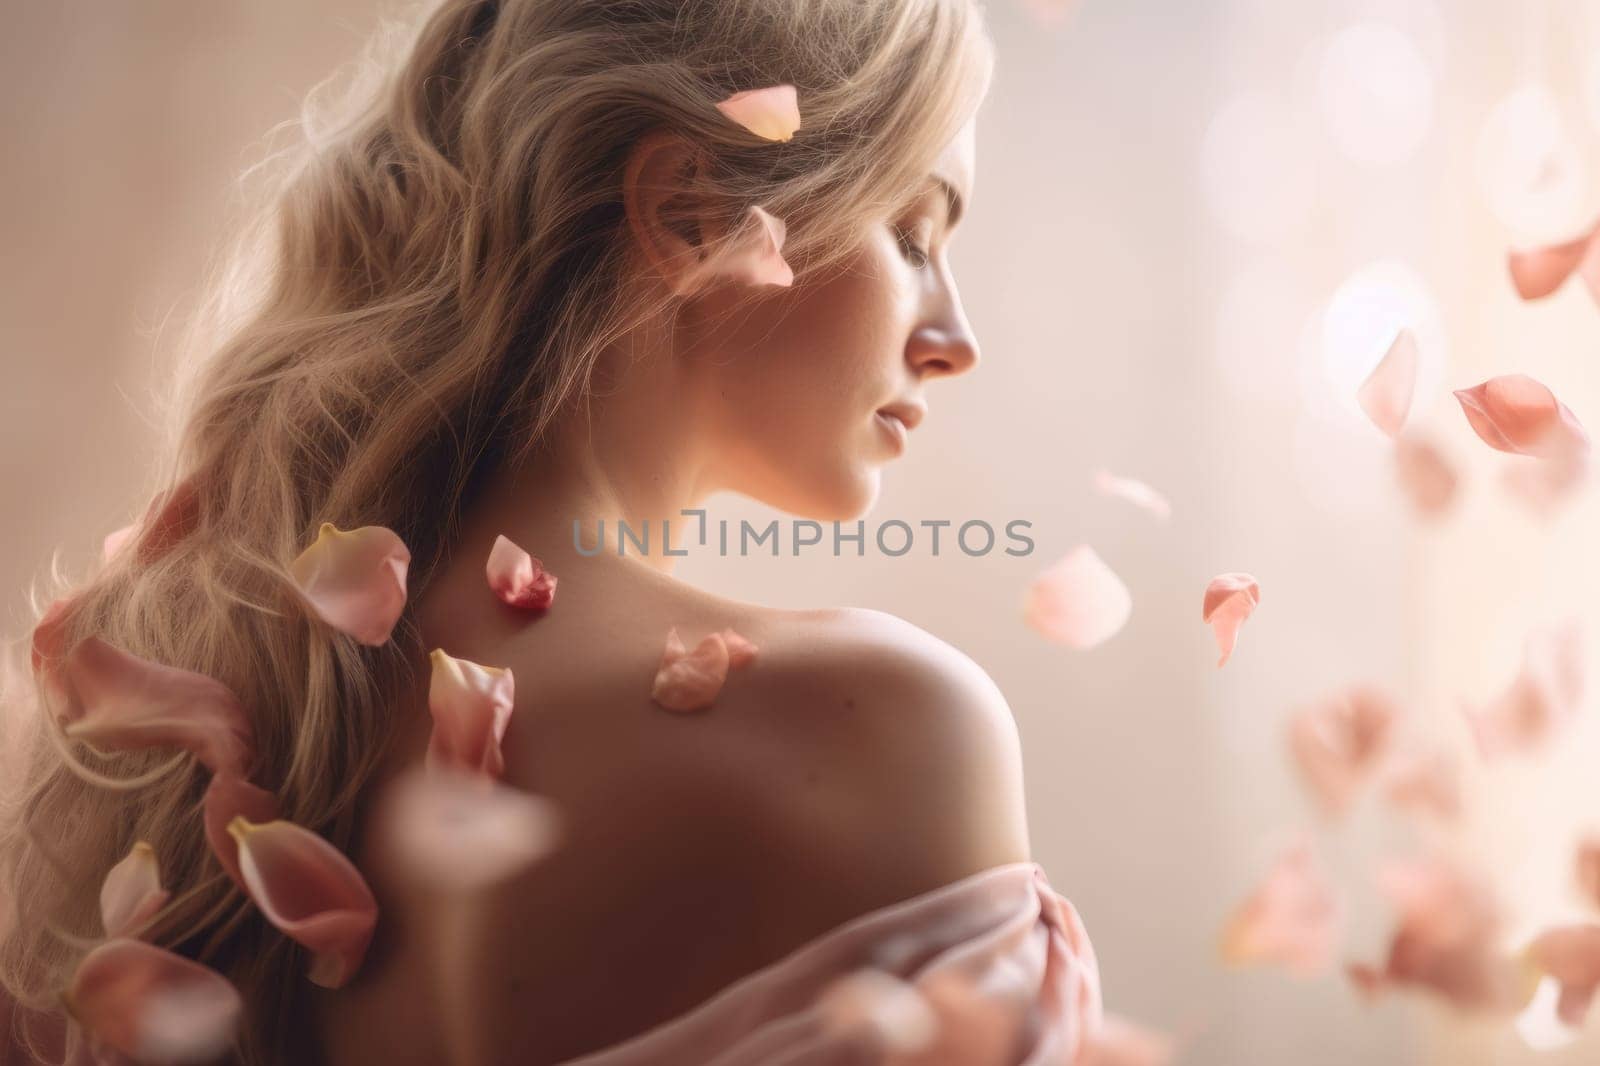 A beautiful young blonde woman walks through falling pink rose petals. Photorealistic illustration generative AI. by julyKoph